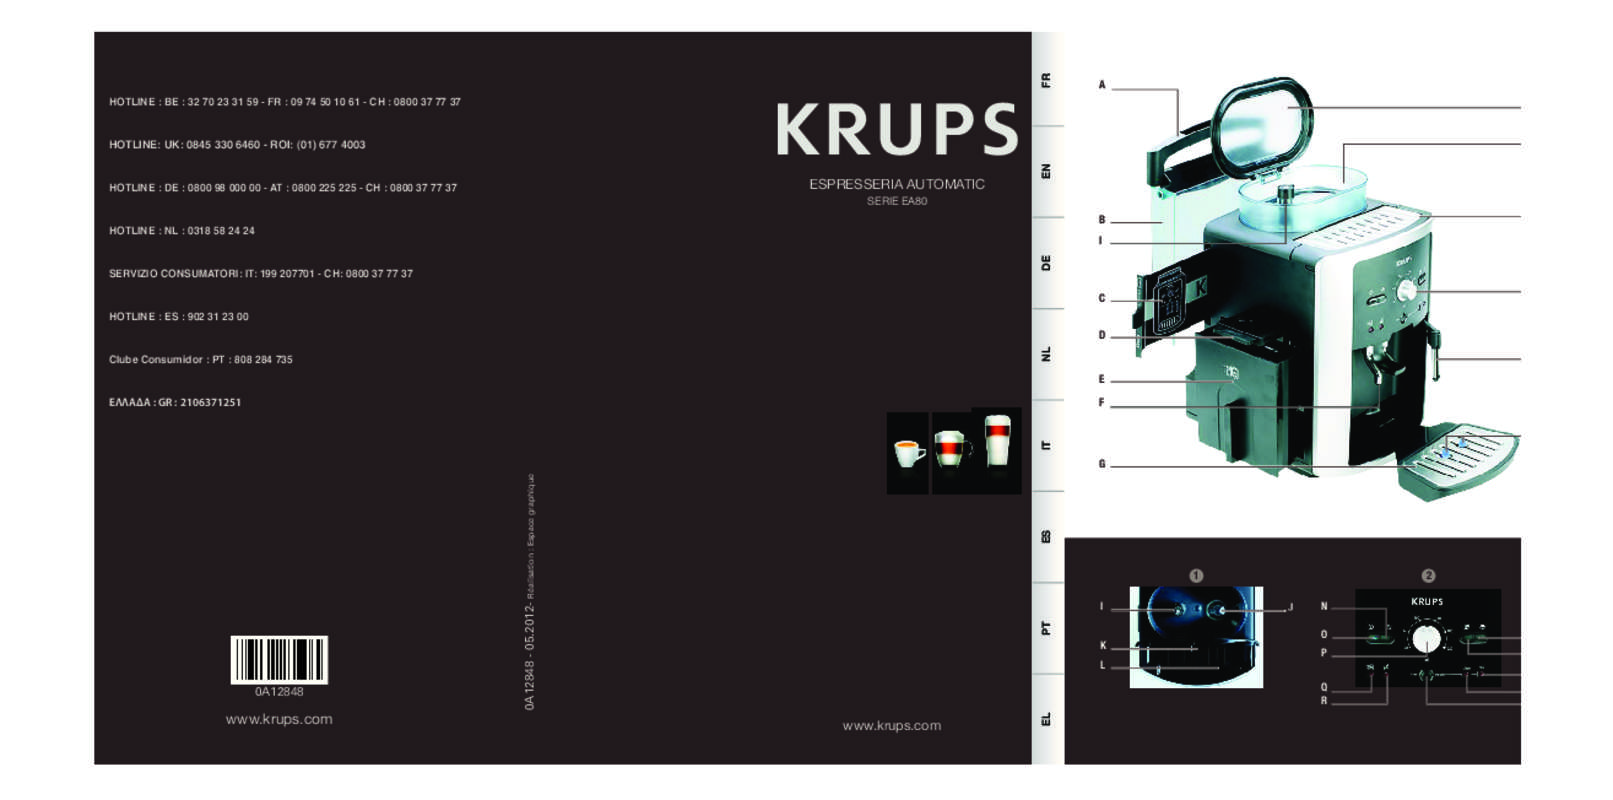 Guide utilisation KRUPS EXPRESSO FULL AUTO COMPACT MANUEL YY8125FD de la marque KRUPS